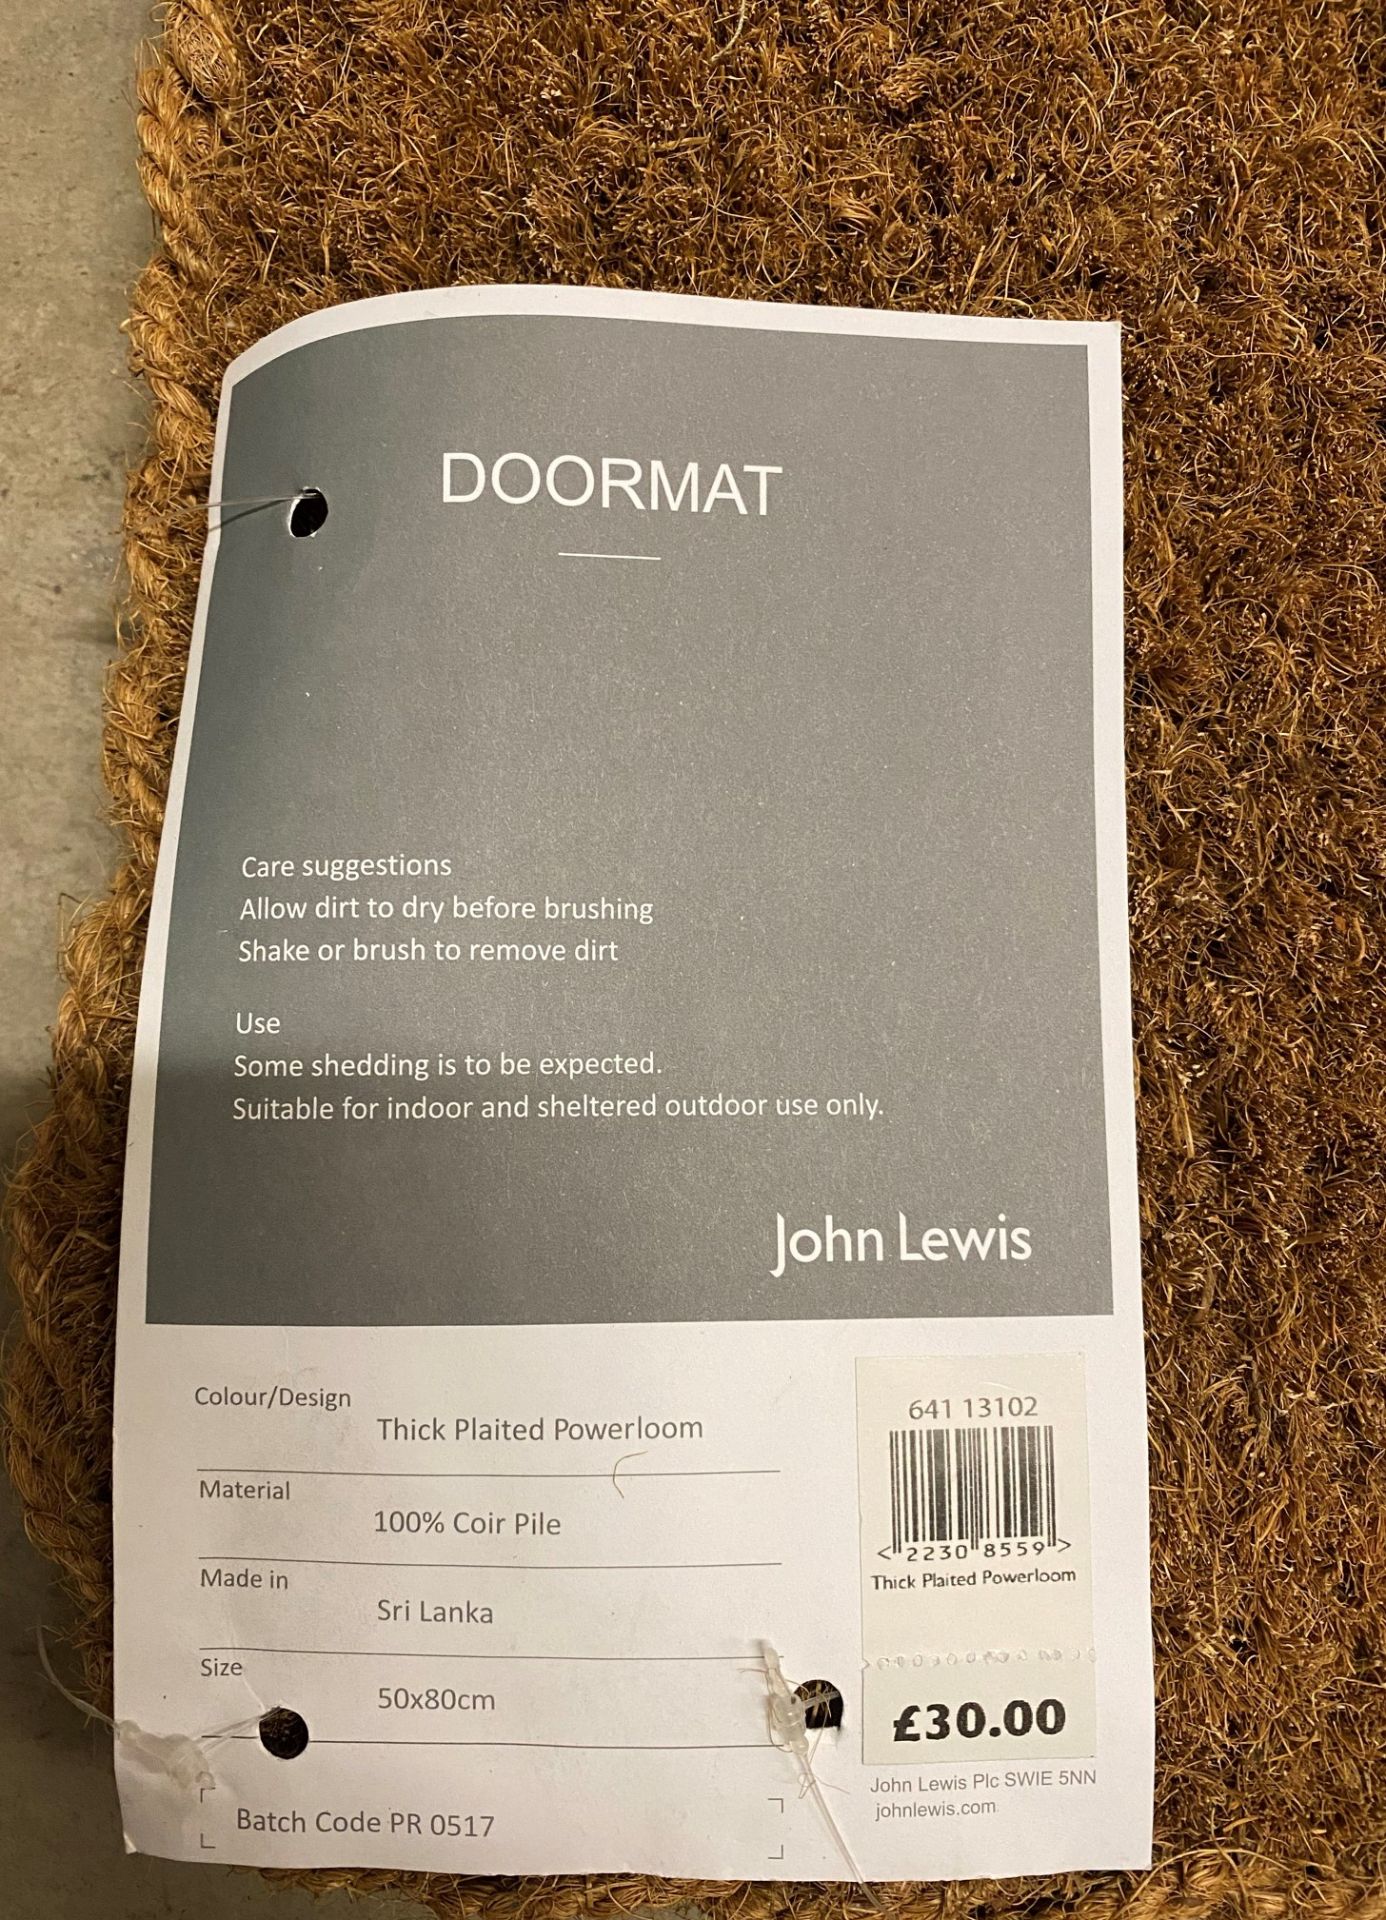 5 x John Lewis Thick Plaited Powerloom 100% Coir Pile door mats (50cm x 80cm) RRP £30 each - Image 4 of 6